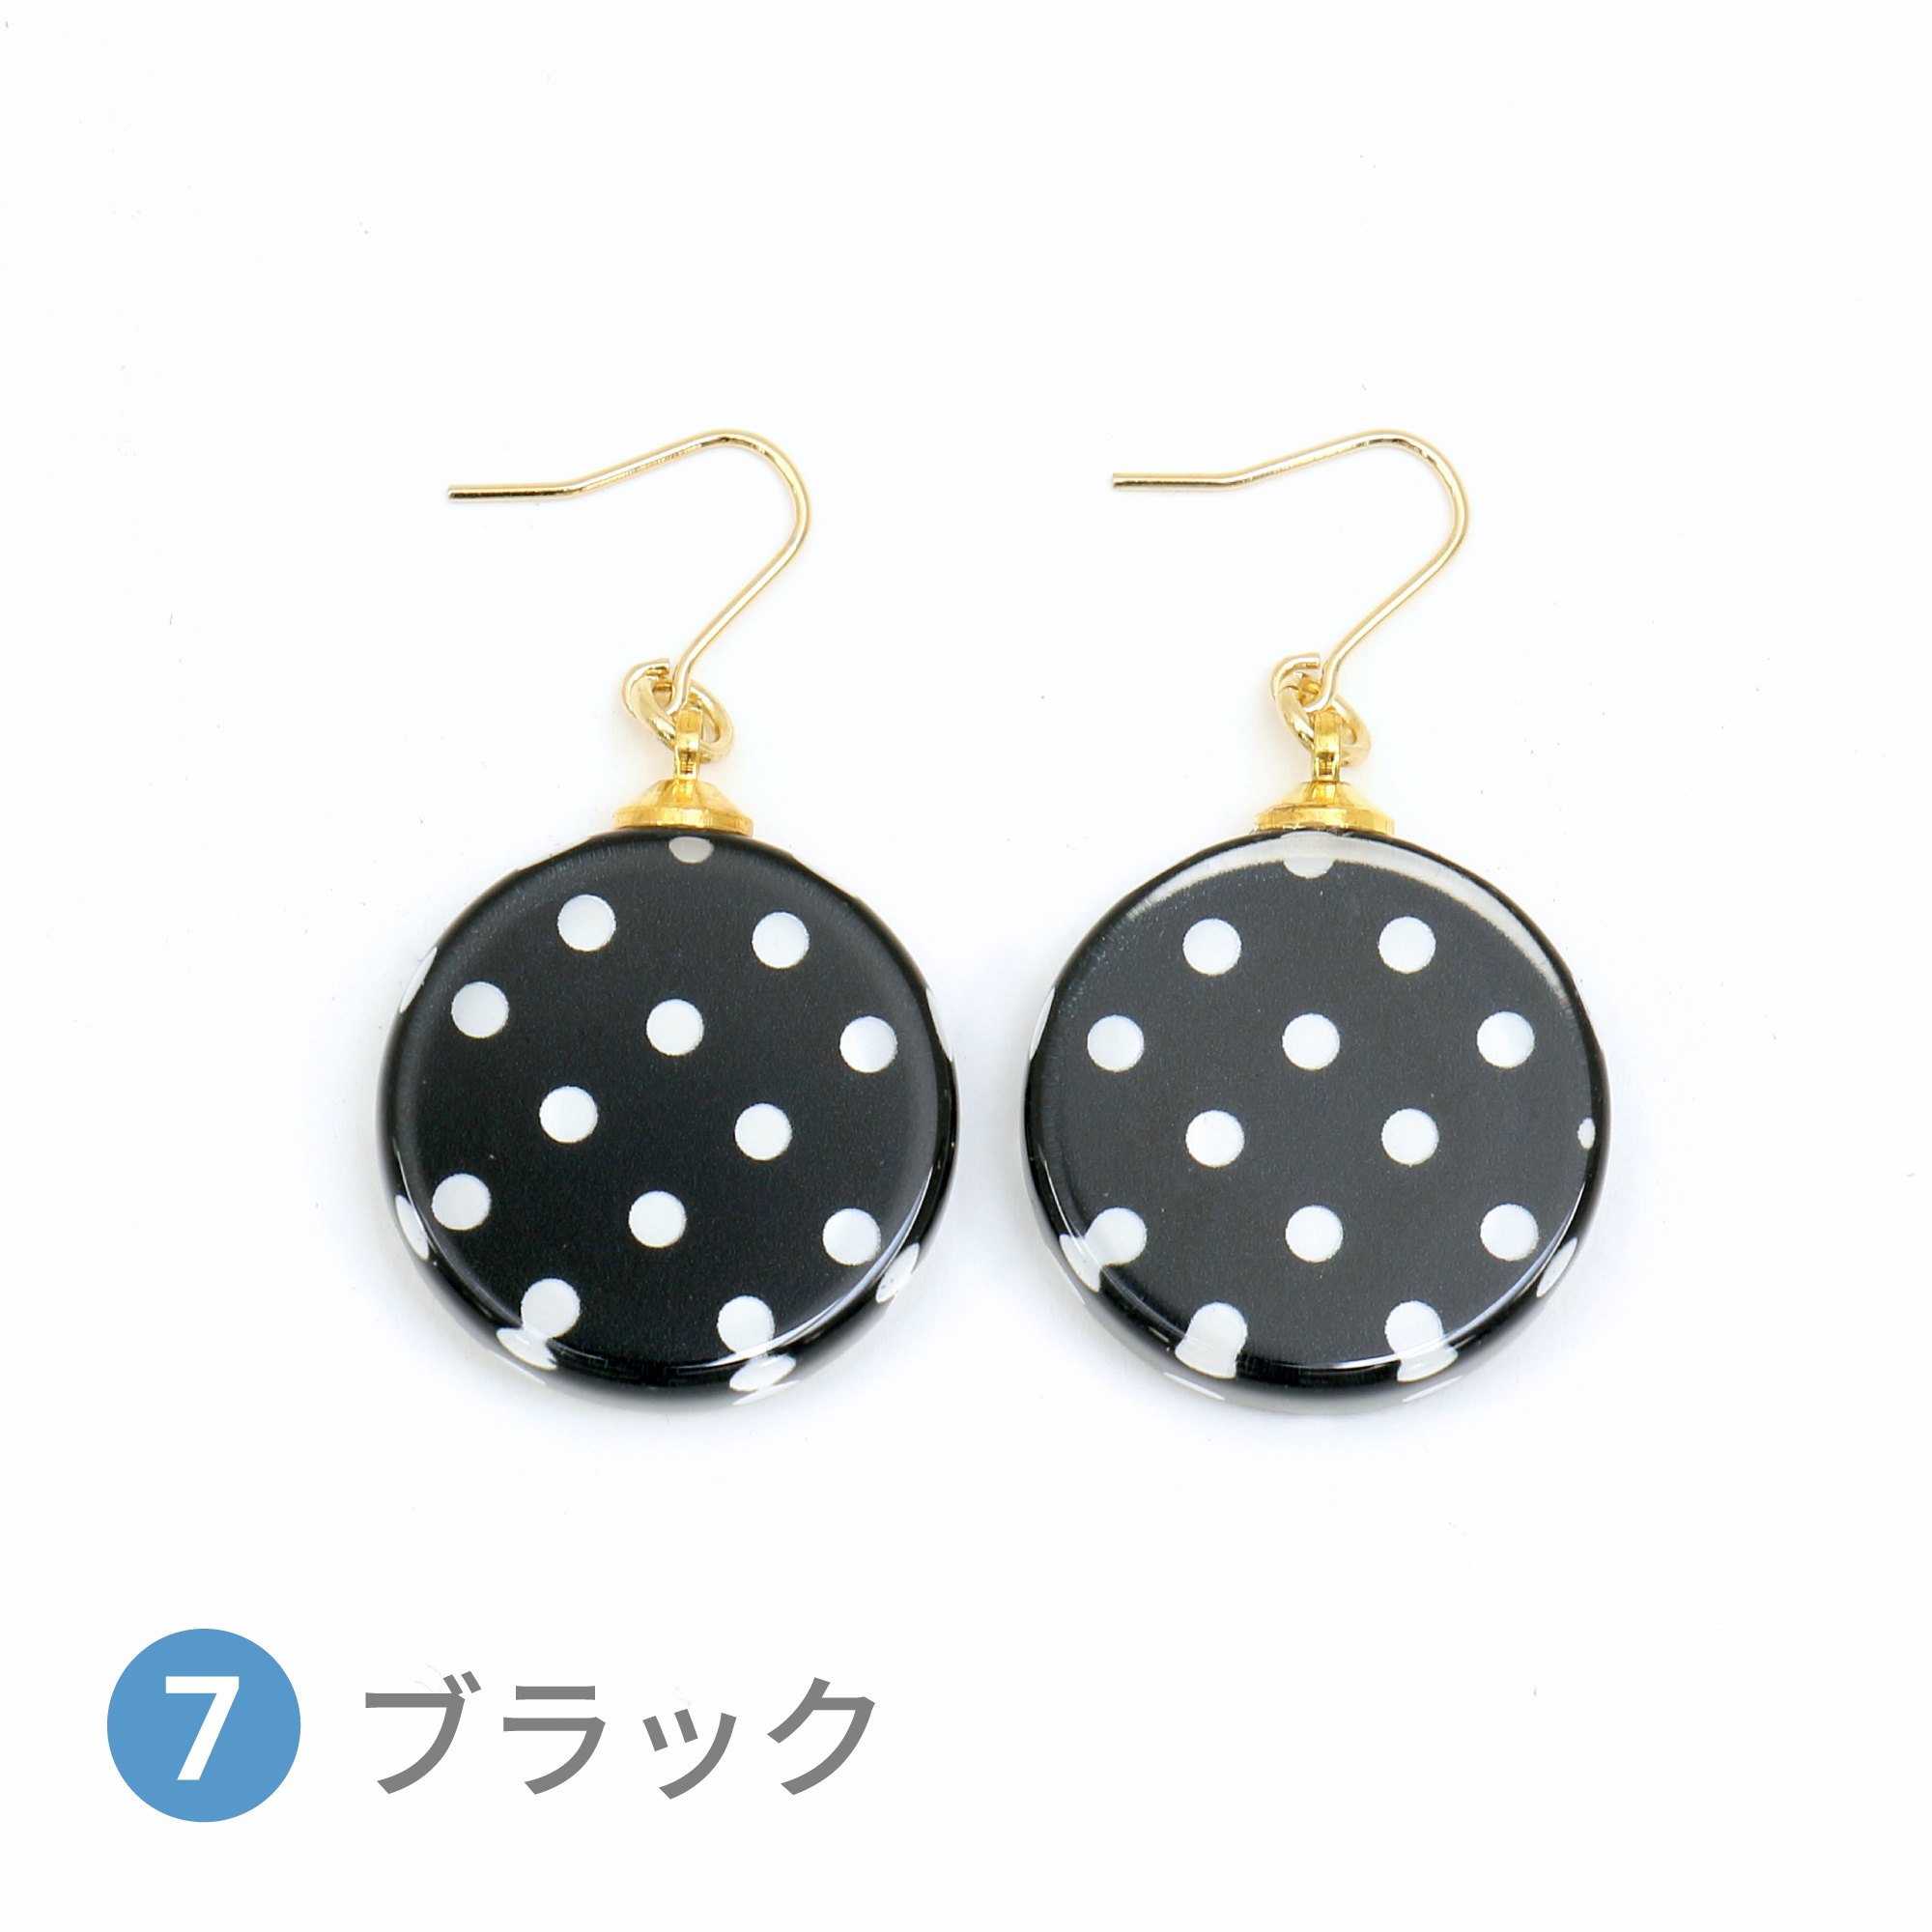 Glass accessories Pierced Earring DOT black round shape